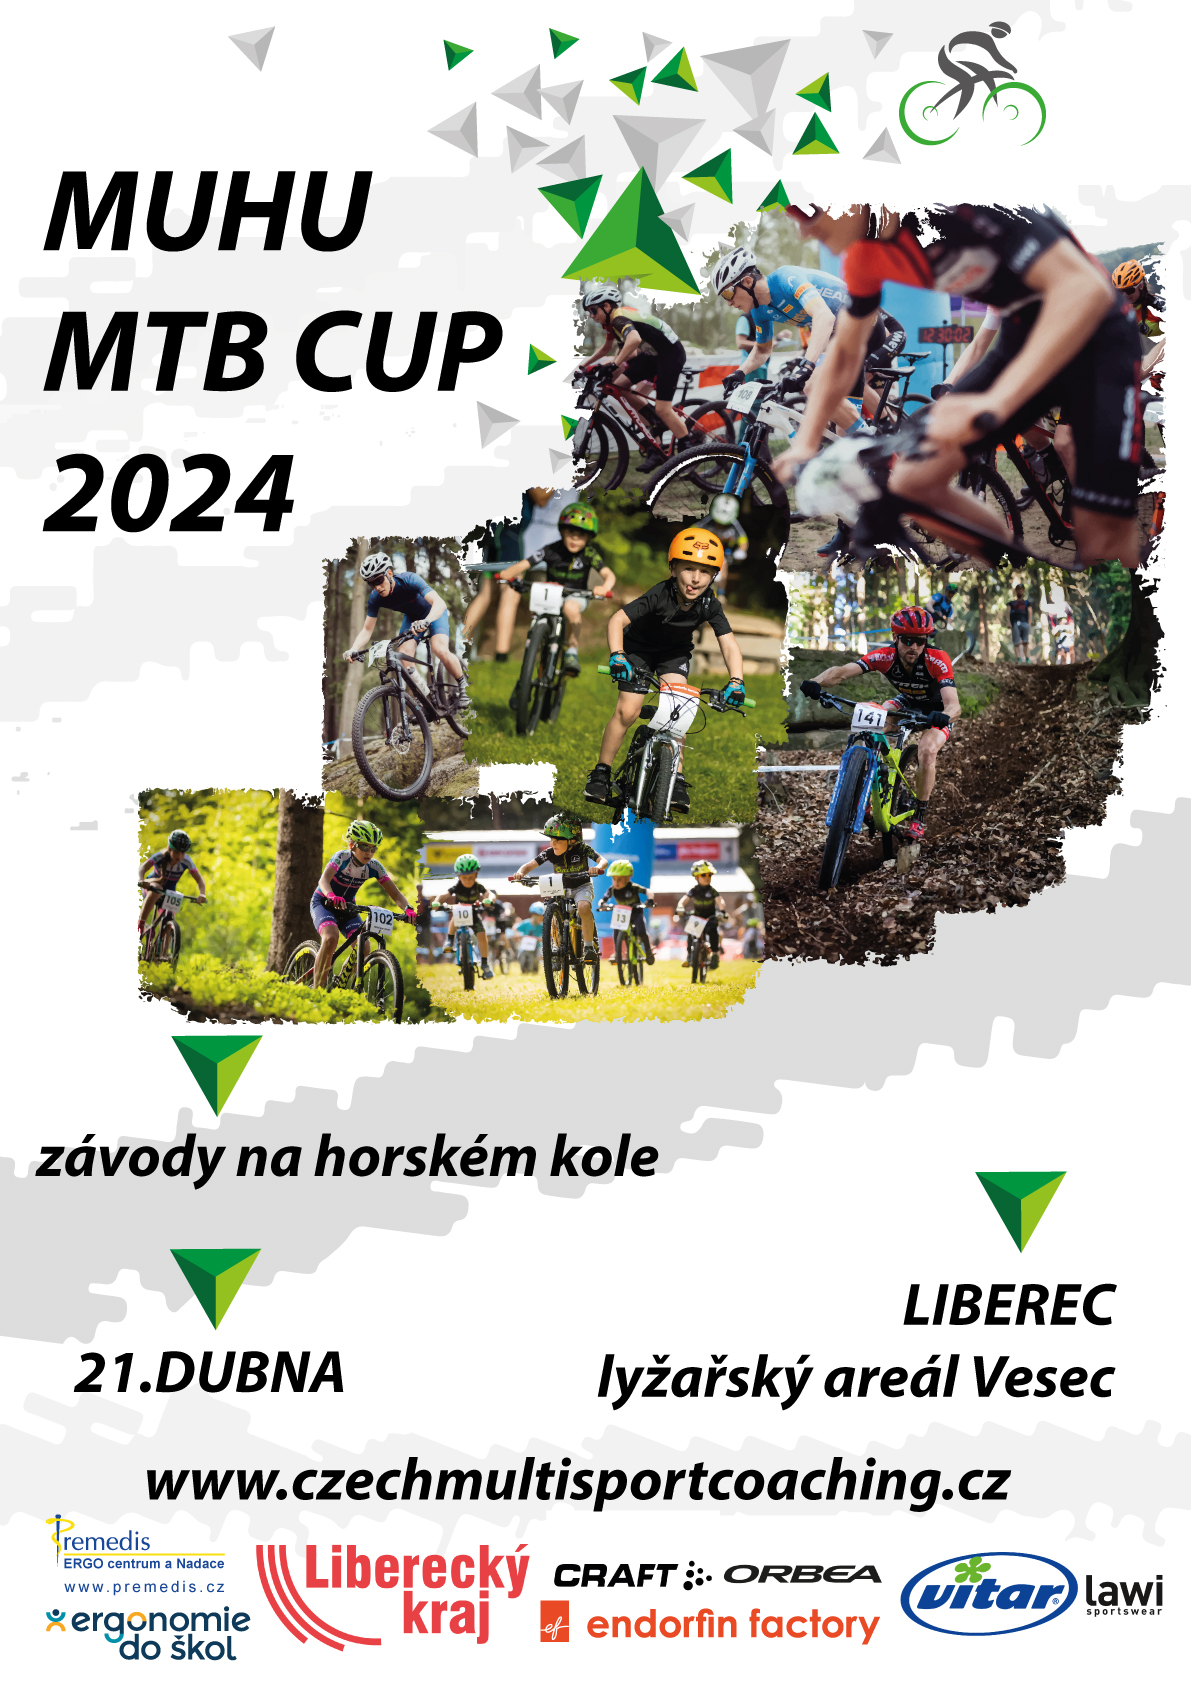 Muhu MTB Cup 2024 - úvodní obrázek